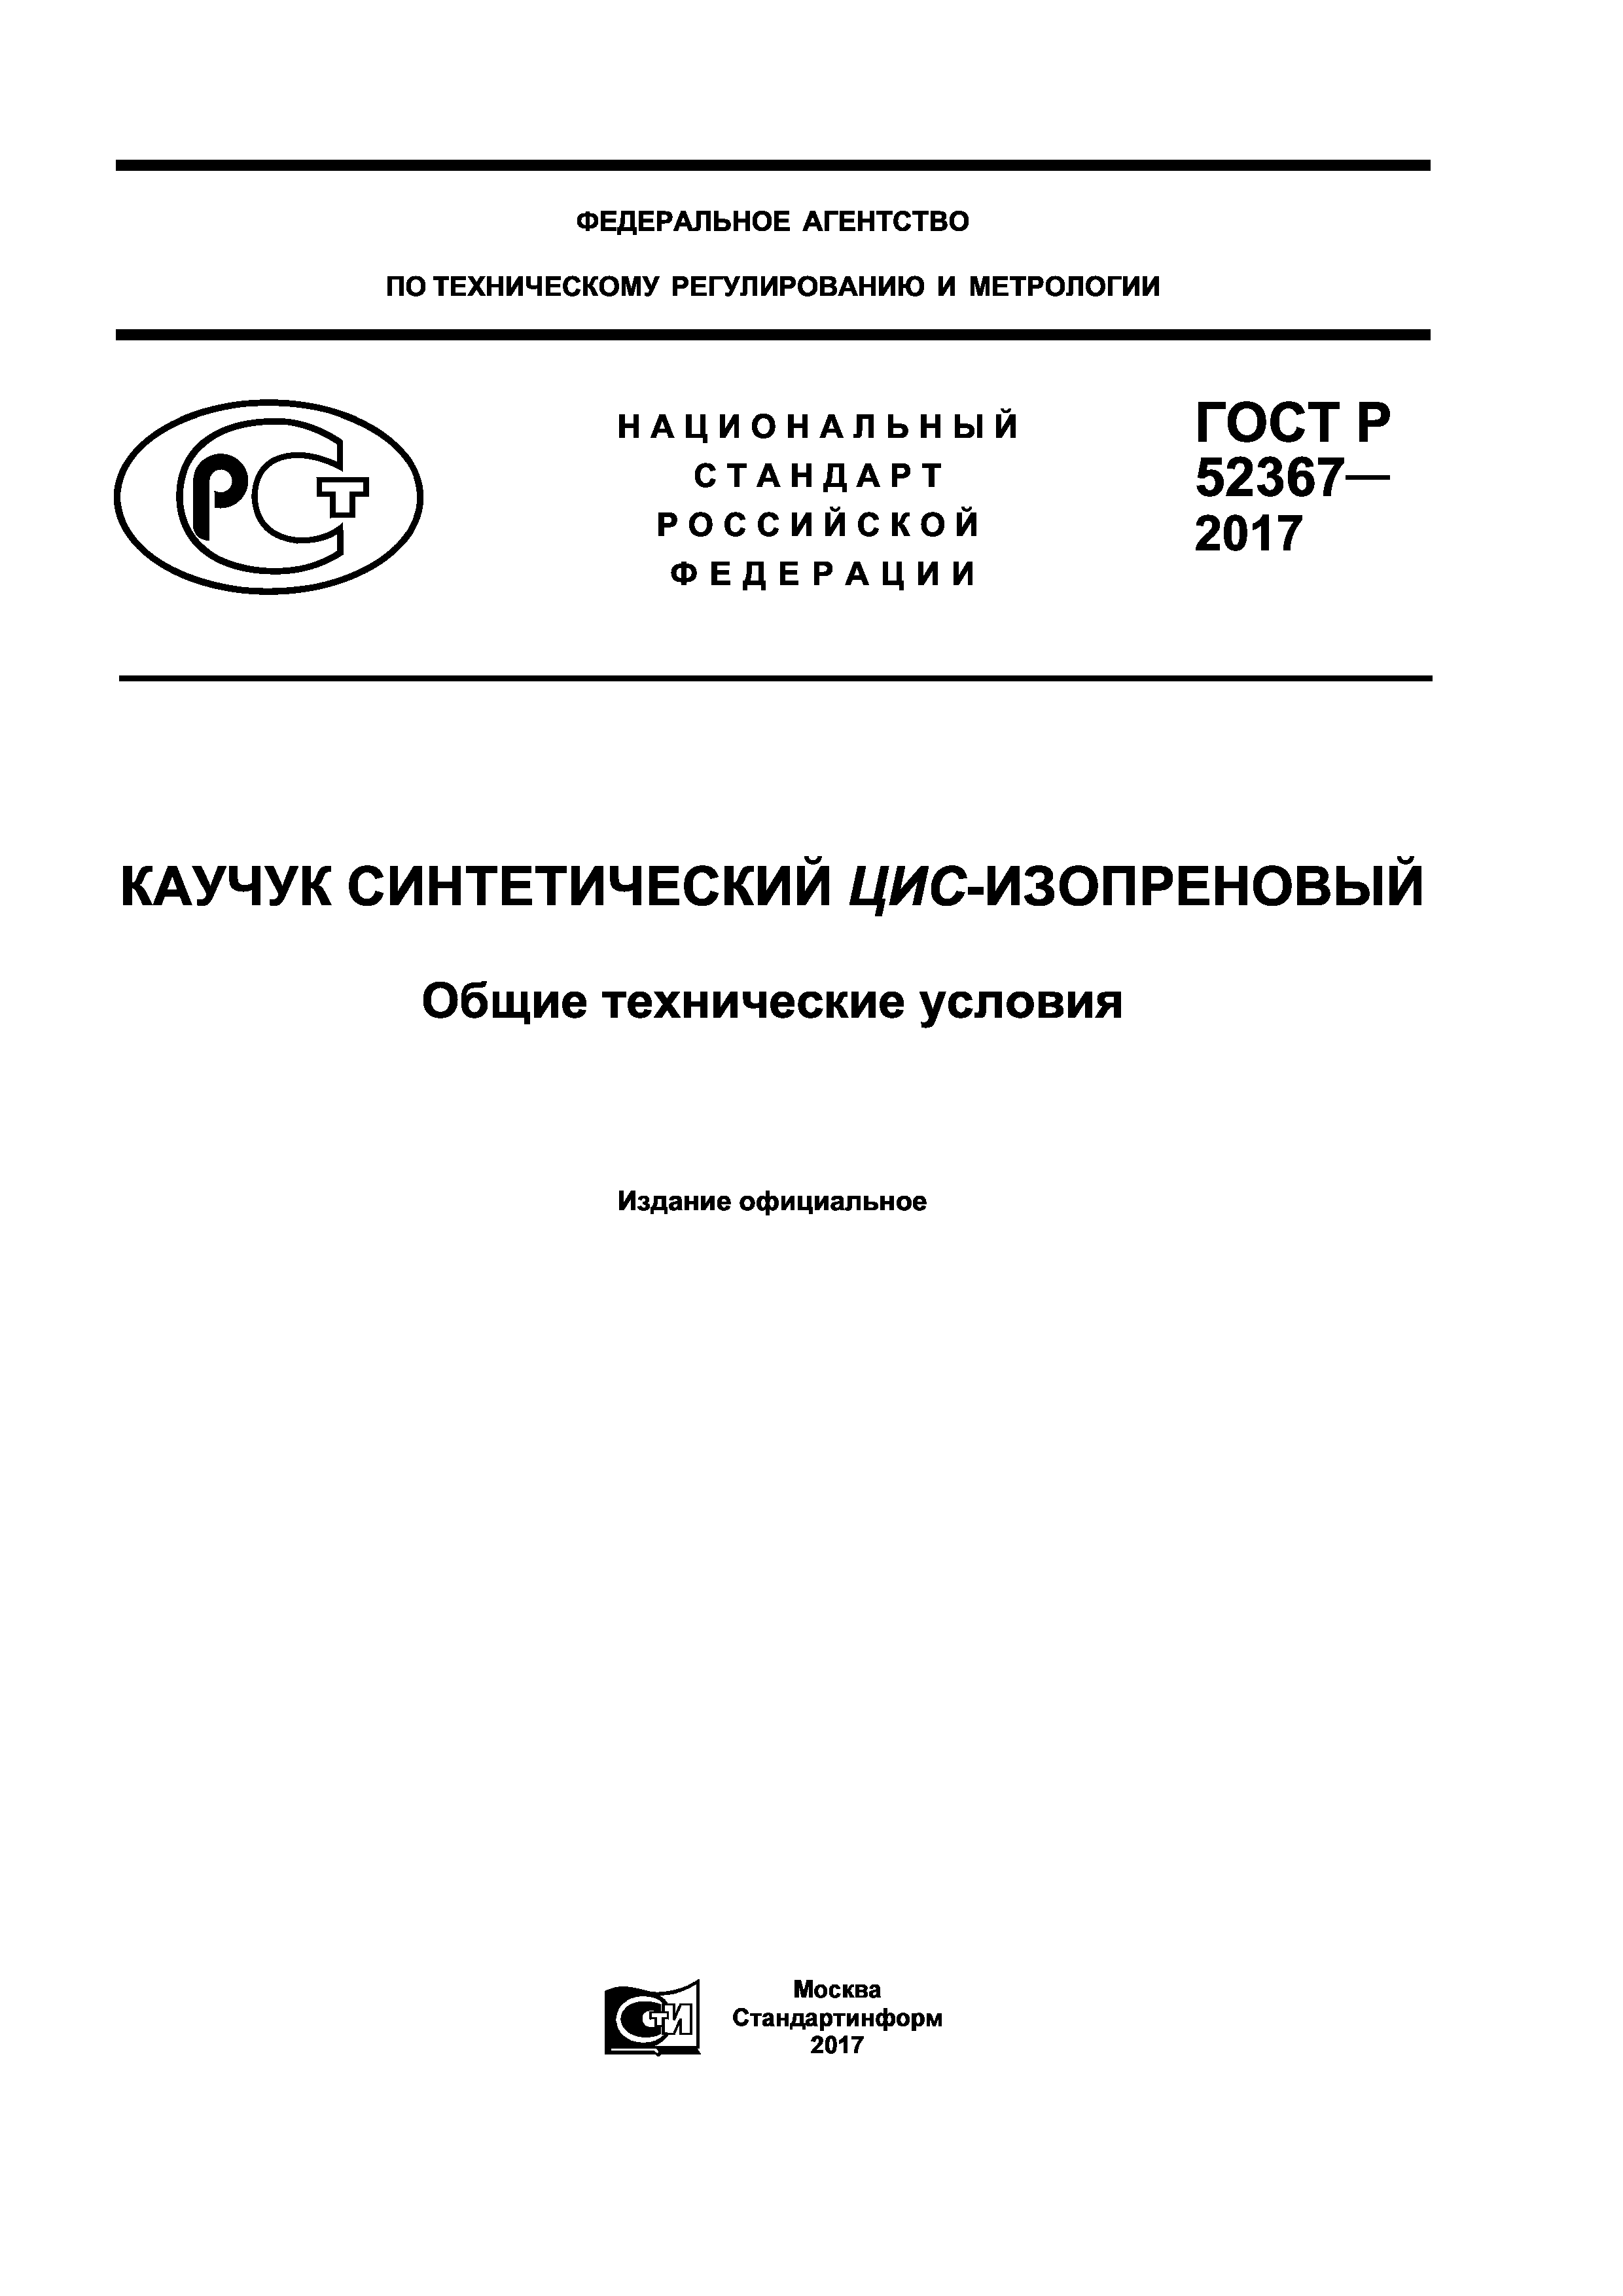 ГОСТ Р 52367-2017